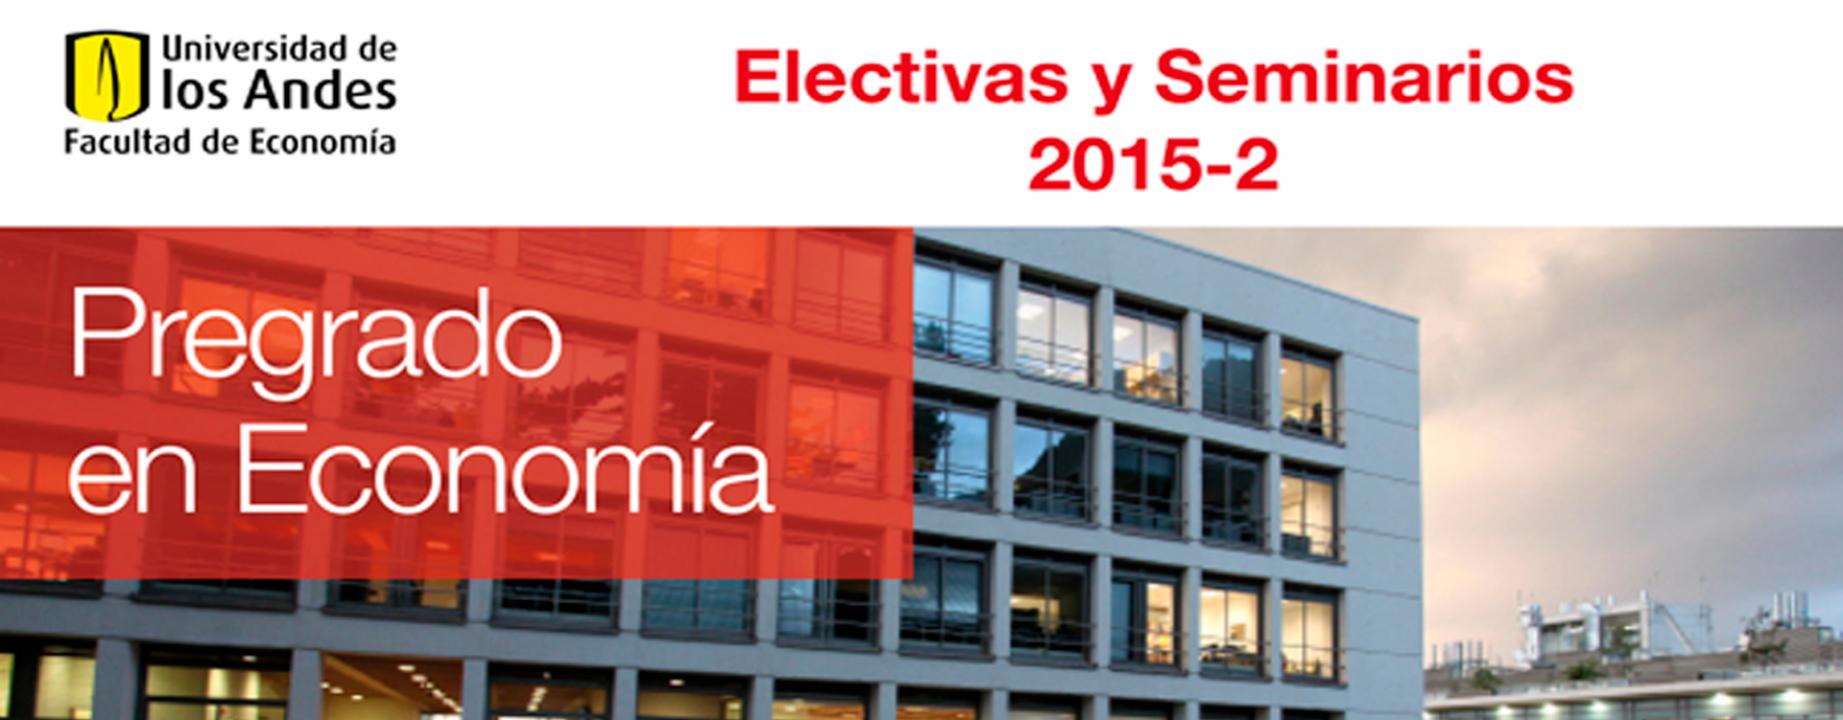 electivas-seminarios-2015-ii-banner